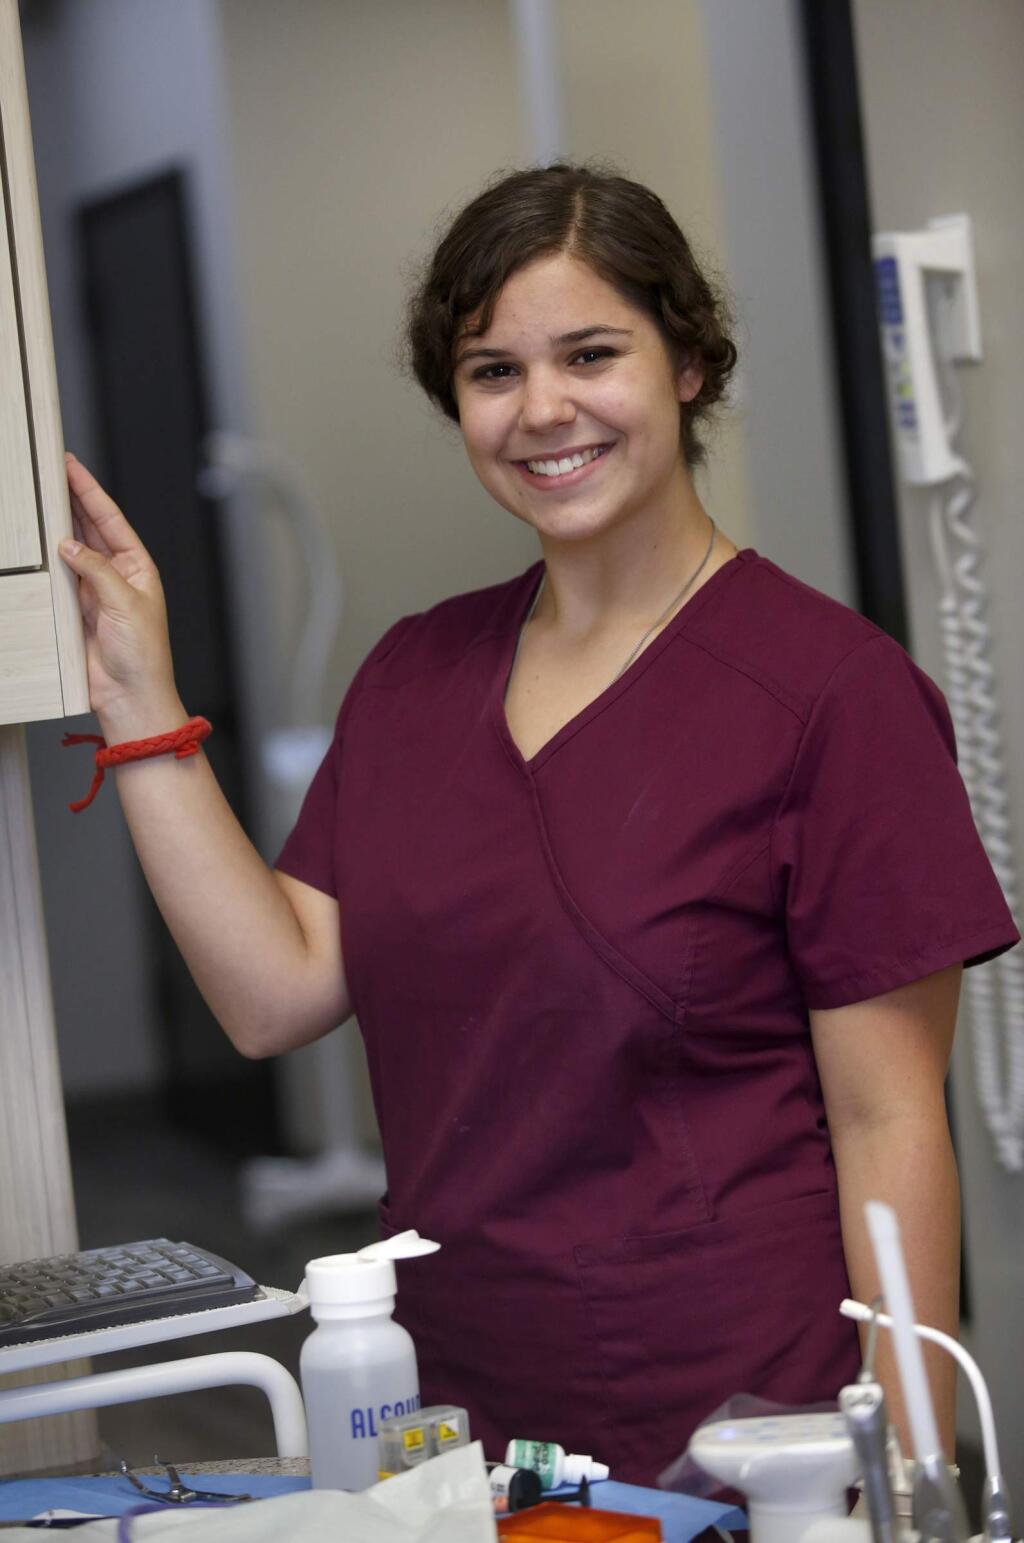 Technology High senior Brooke Wilson volunteers in a dental office in Petaluma on Tuesday, Aug.5, 2014. (BETH SCHLANKER / The Press Democrat)